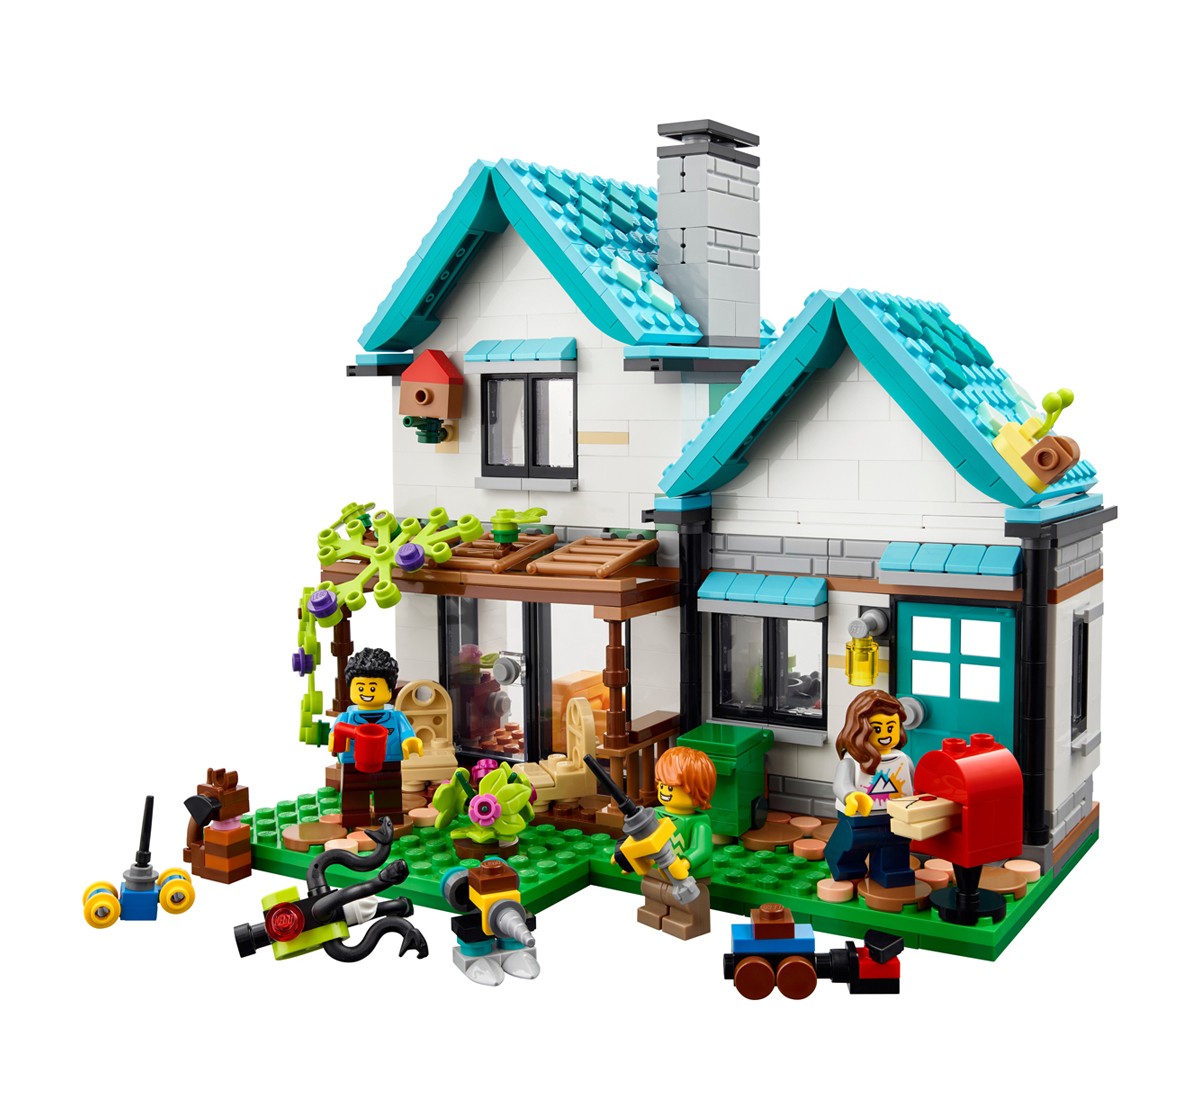 LEGO Friends Pancake Shop Toy Cafe Set - Imagination Toys